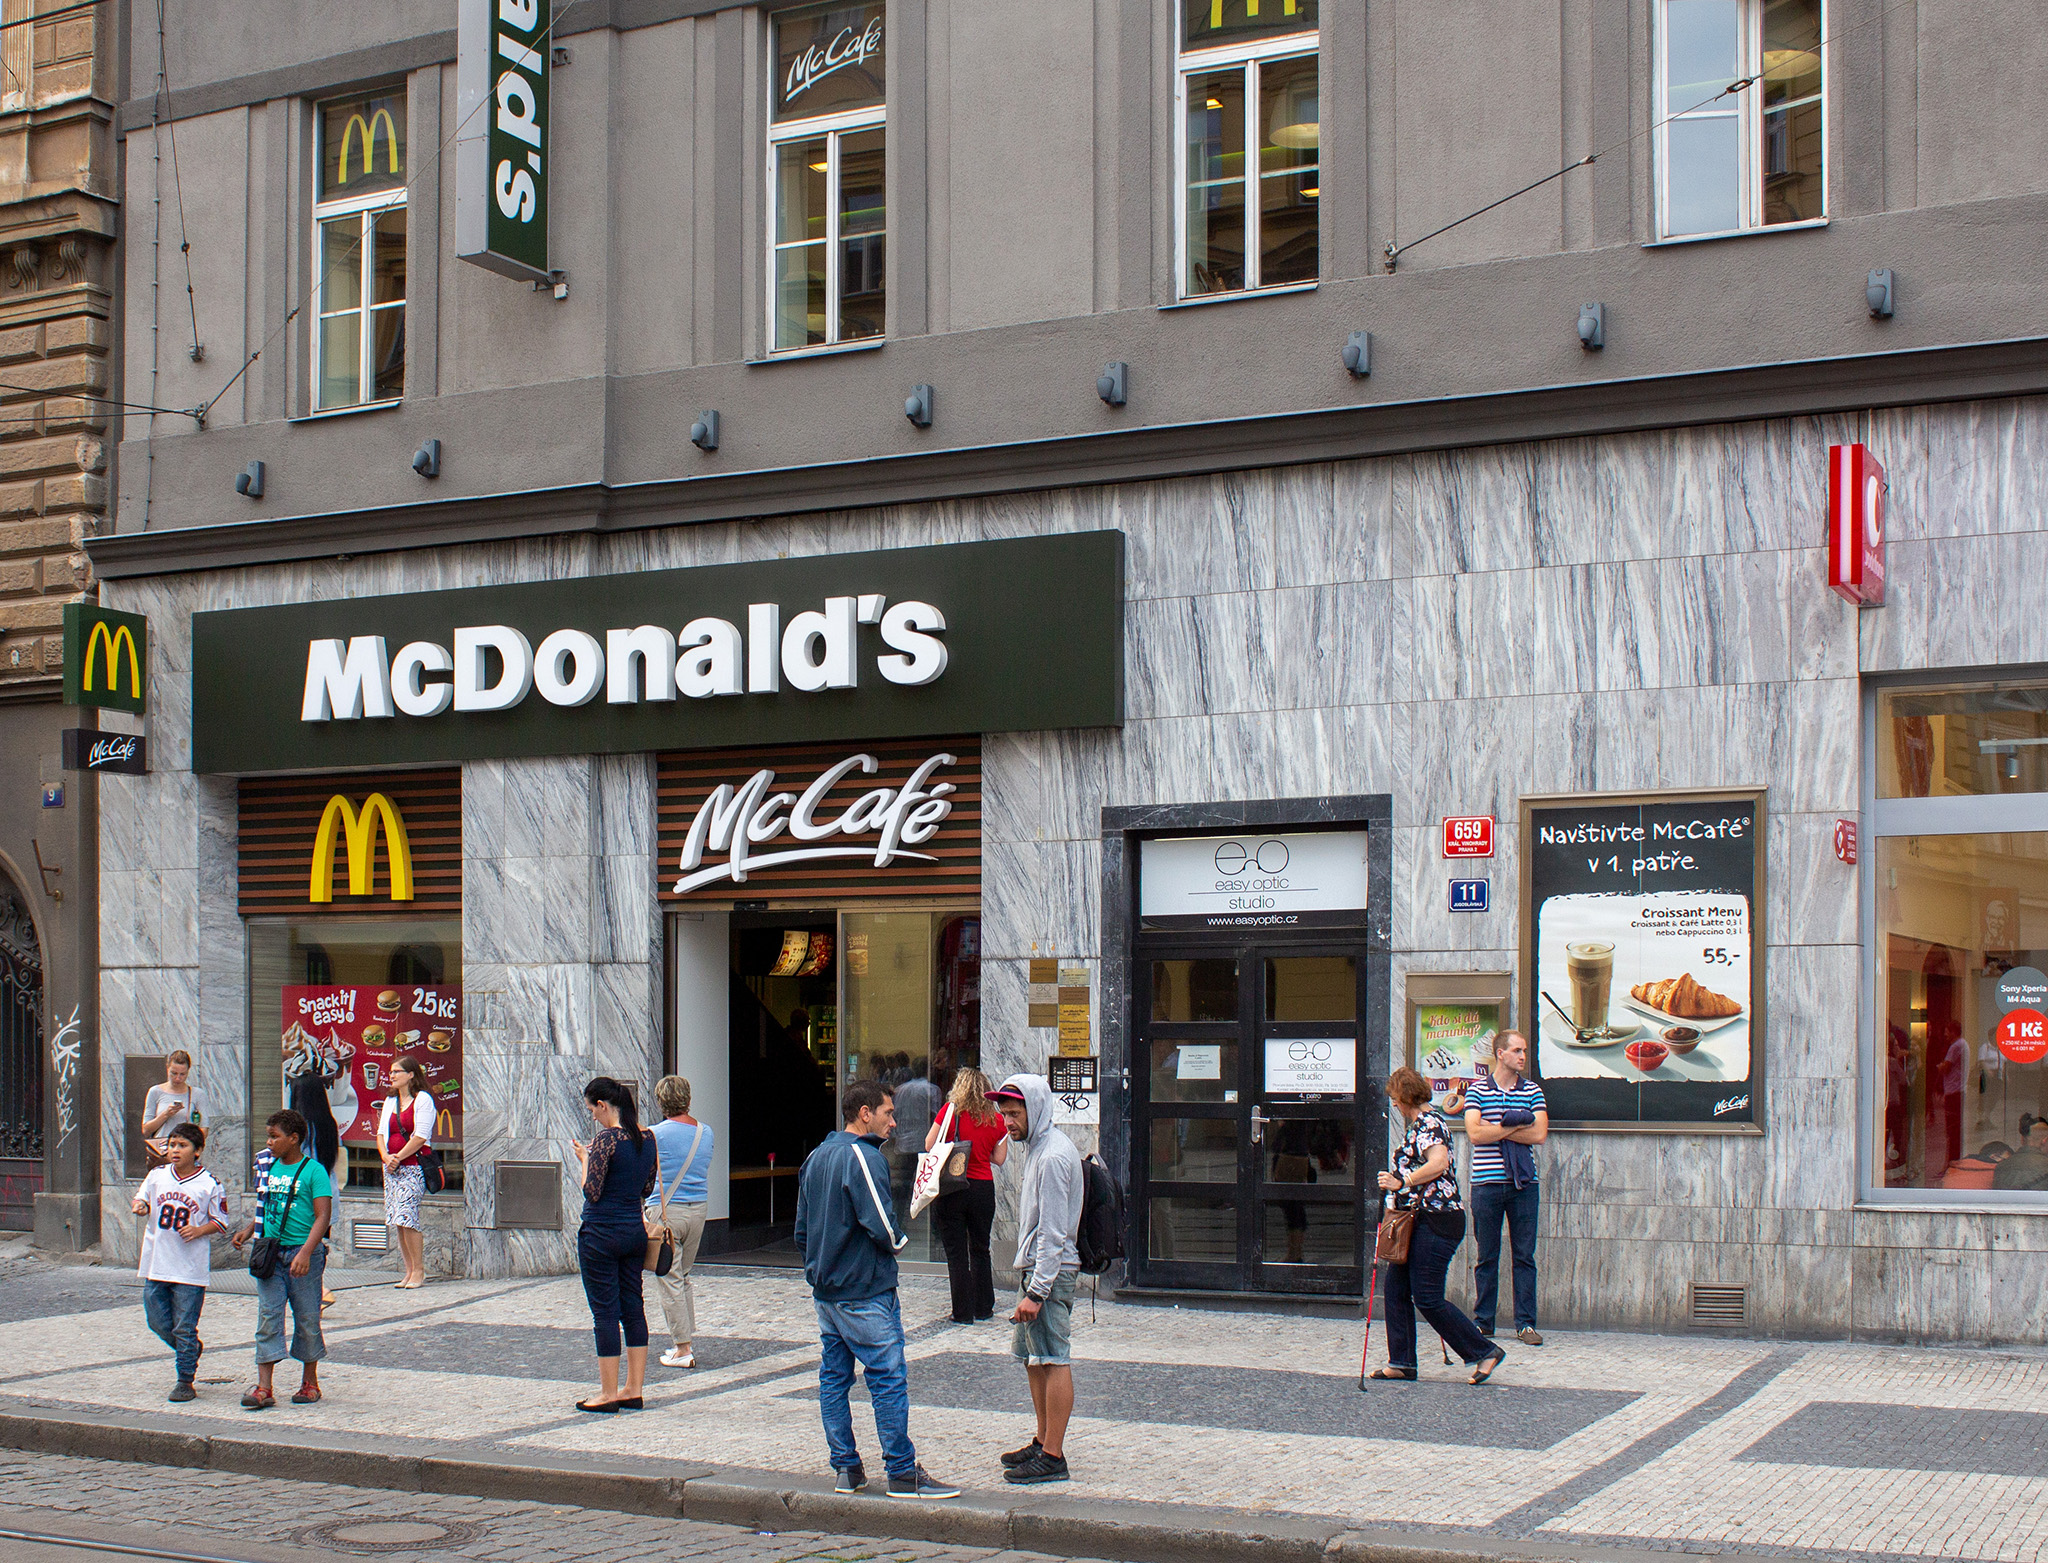 Das McDonald’s-Restaurant in Praha (I.P. Pavlova)